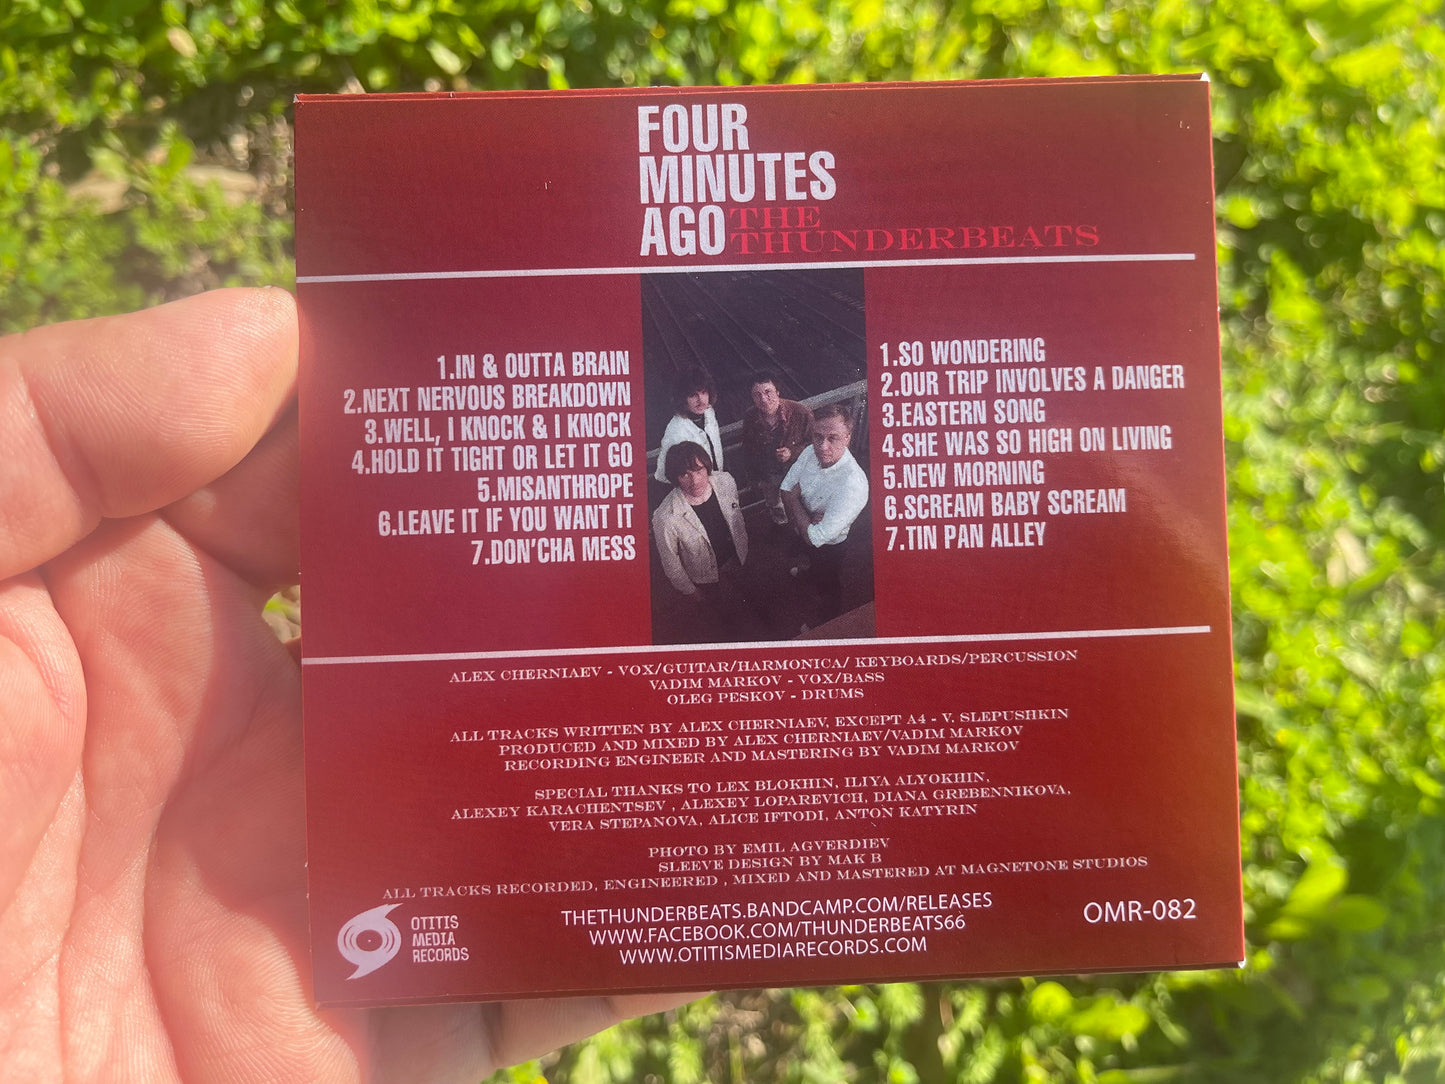 OMR-082 The Thunderbeats “Four Minutes Ago” CD/LP (Pre-Order)